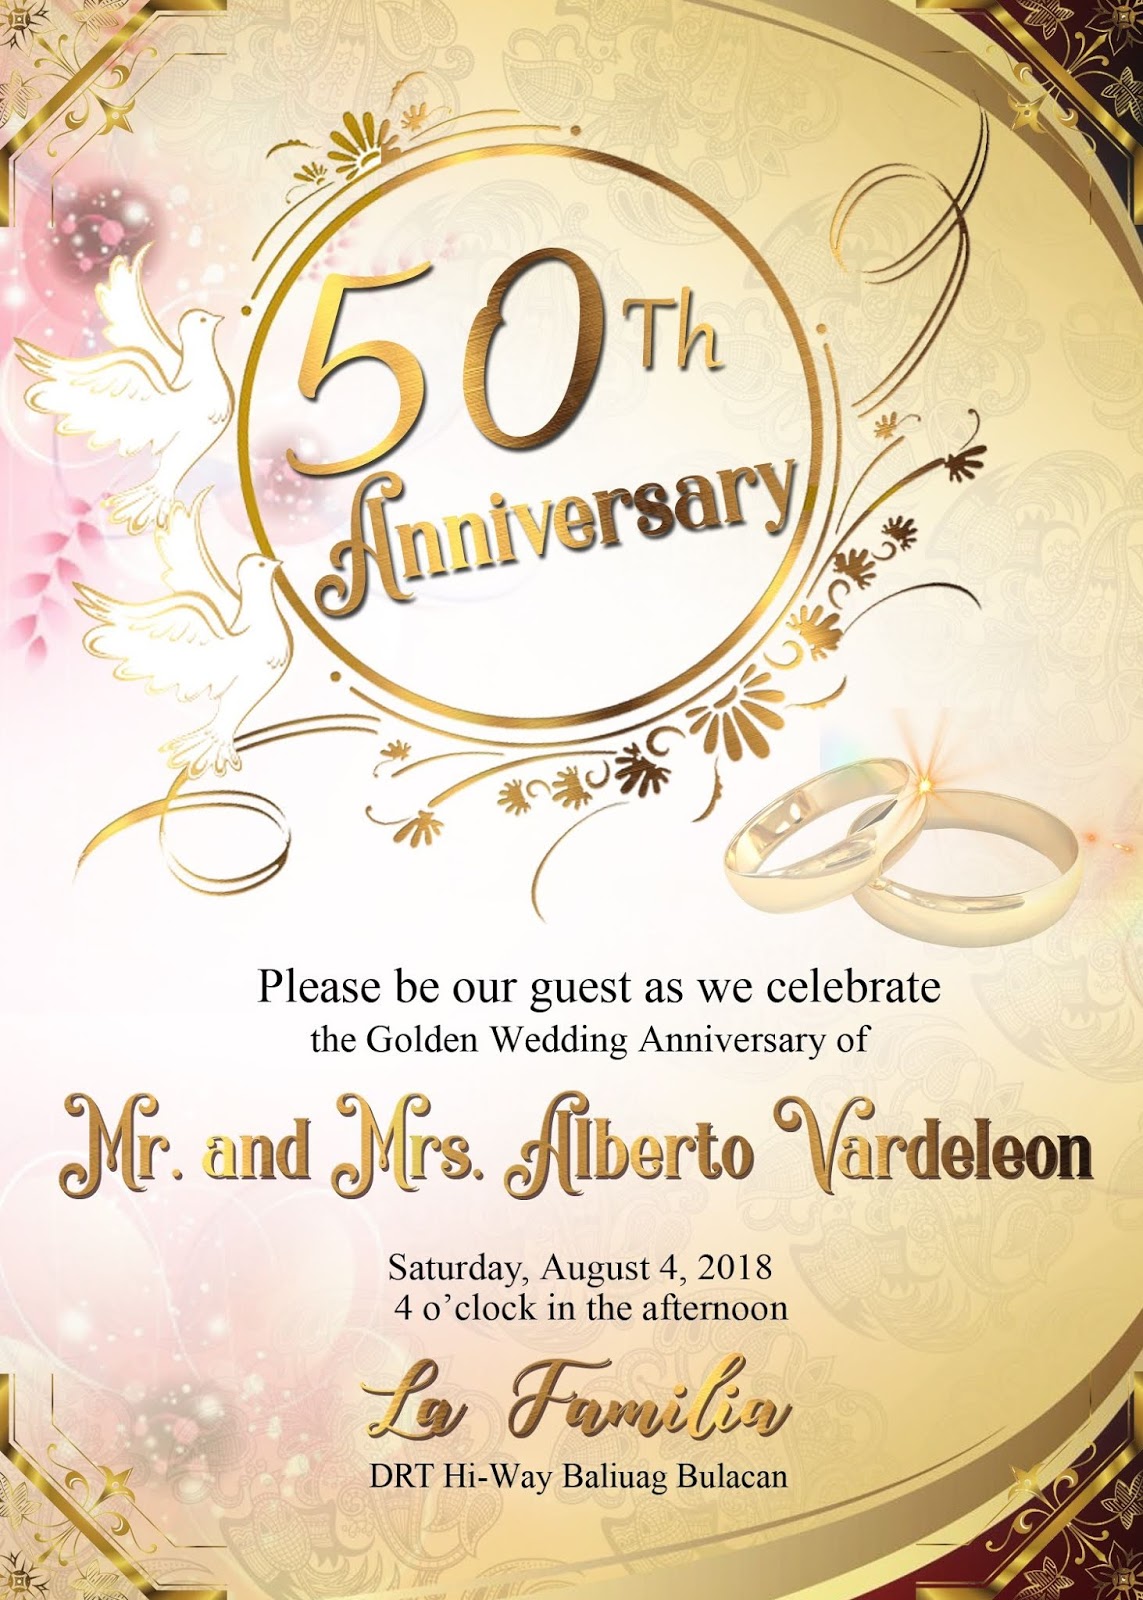 50th wedding anniversary sample invitation card - Get Layout